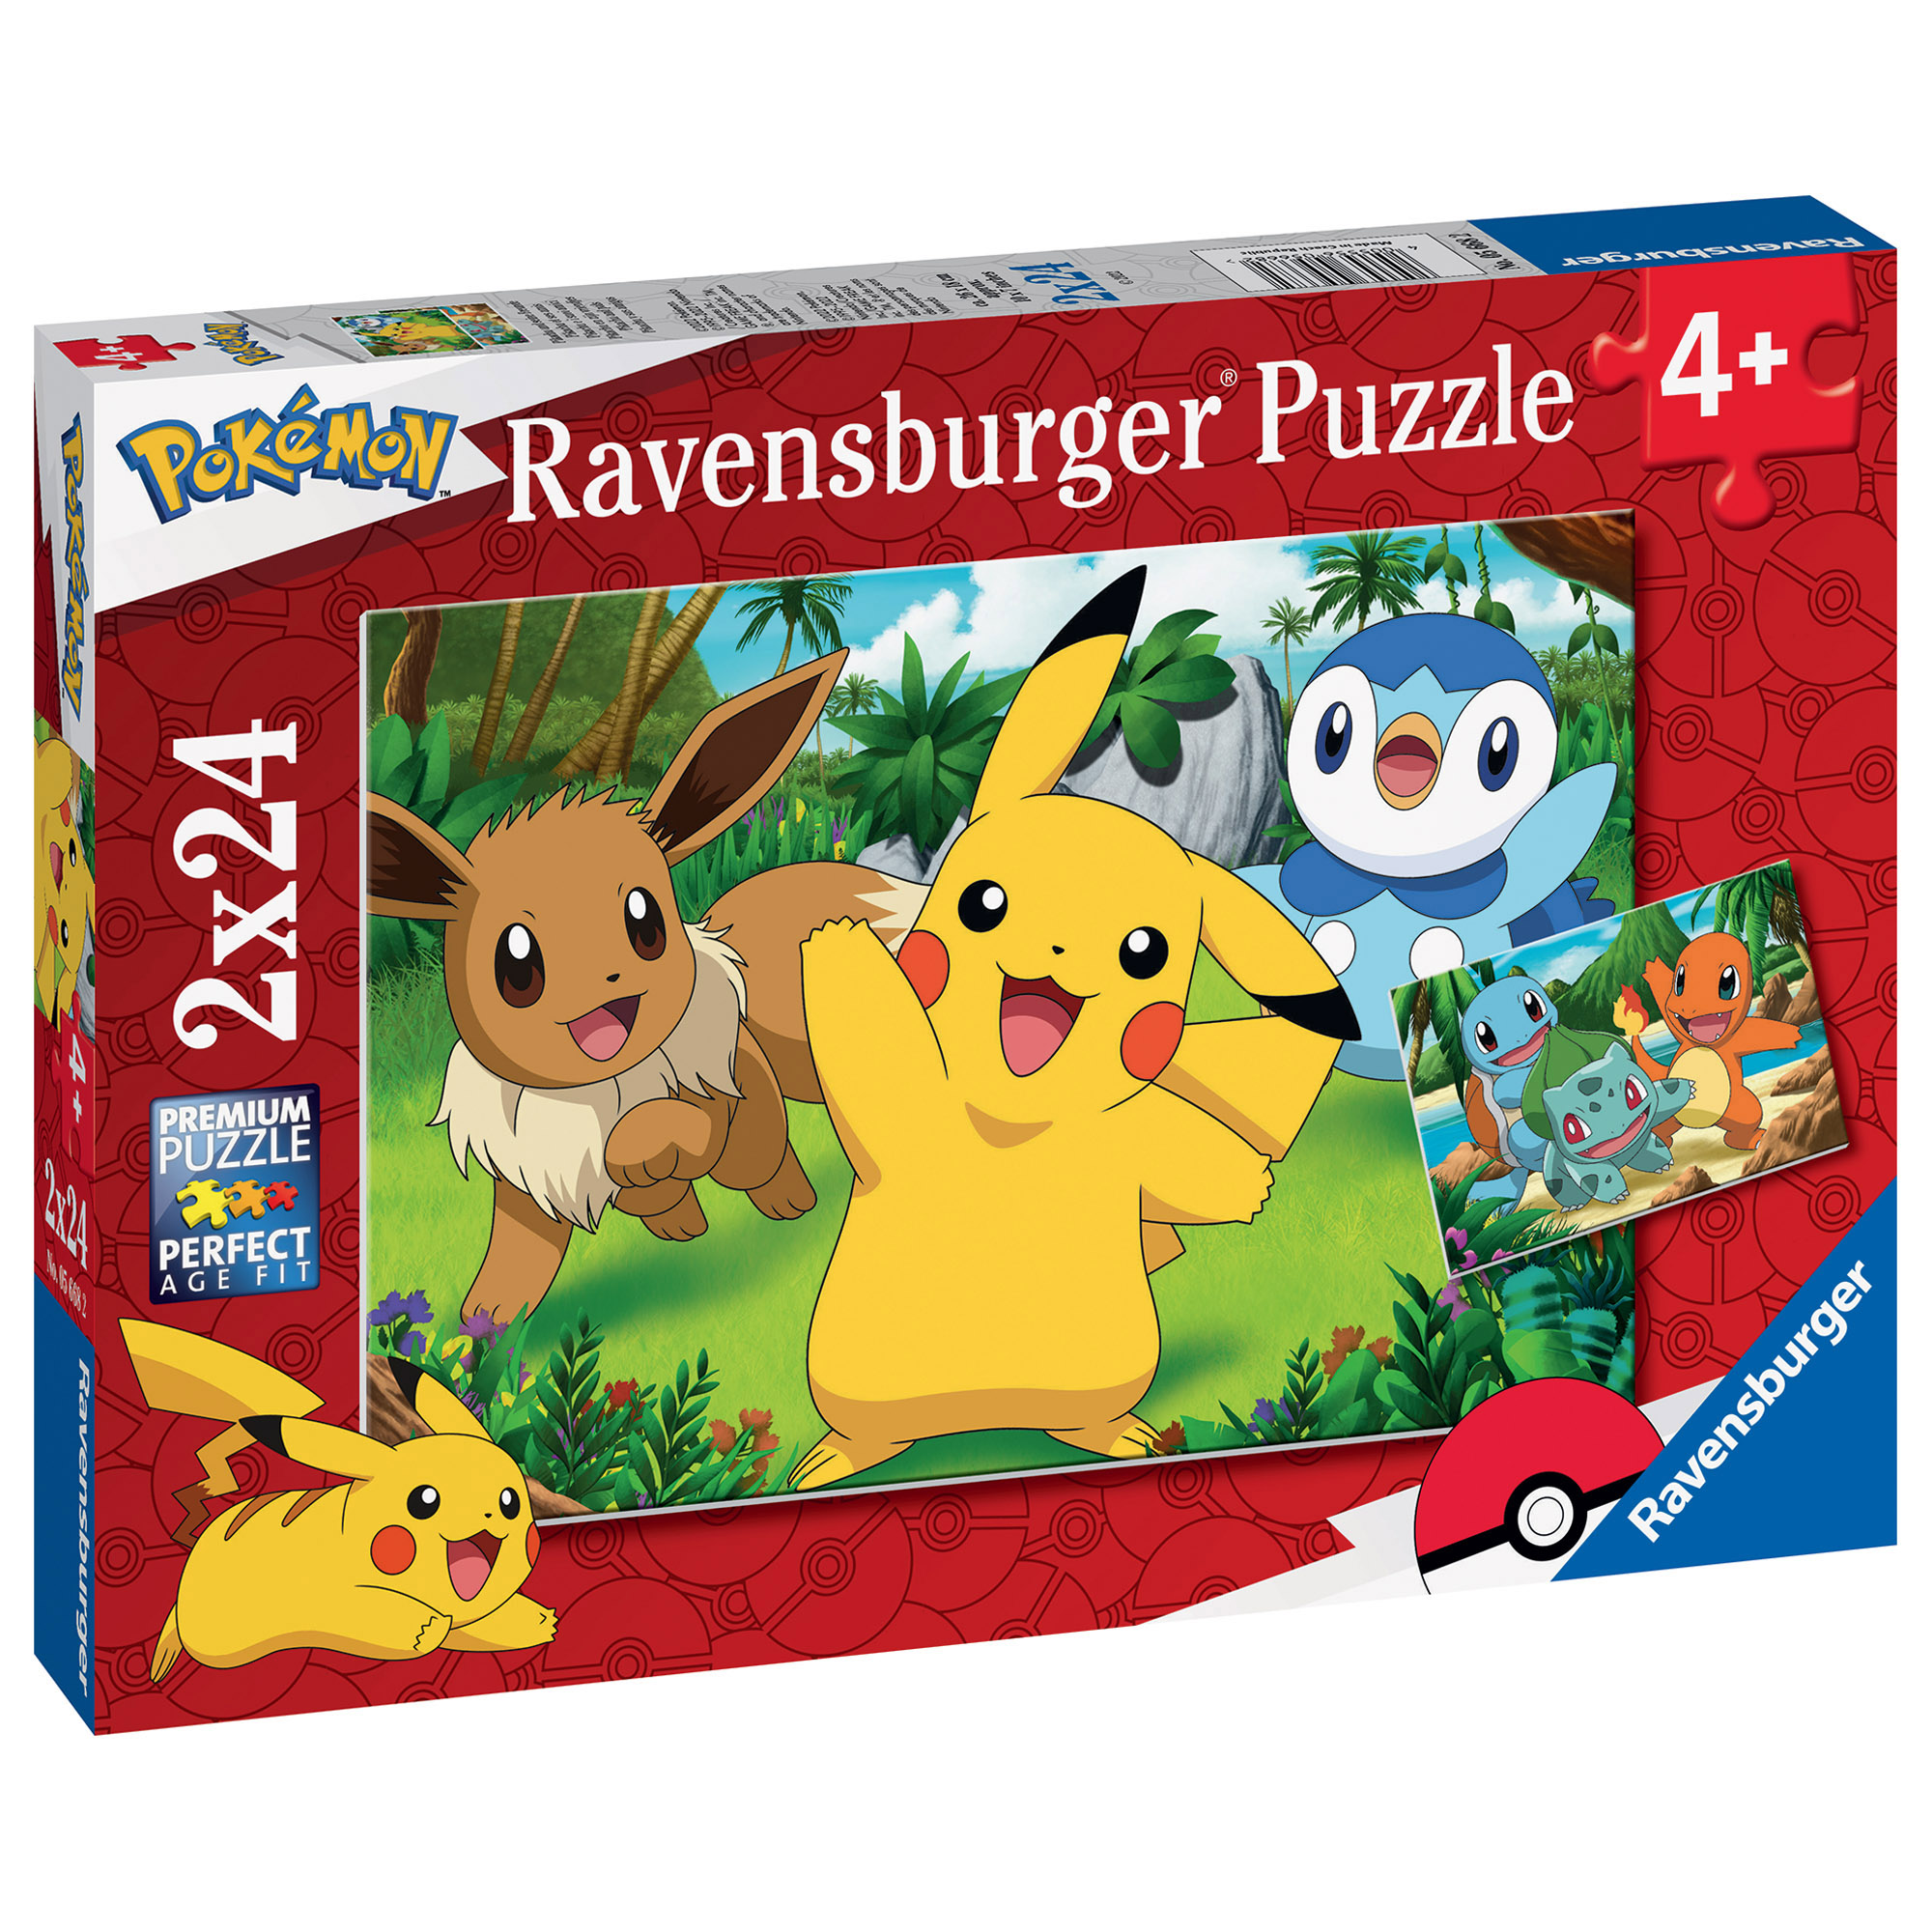 Ravensburger - puzzle pokémon, collezione 2x24, 2 puzzle da 24 pezzi, età raccomandata 4+ anni - POKEMON, RAVENSBURGER